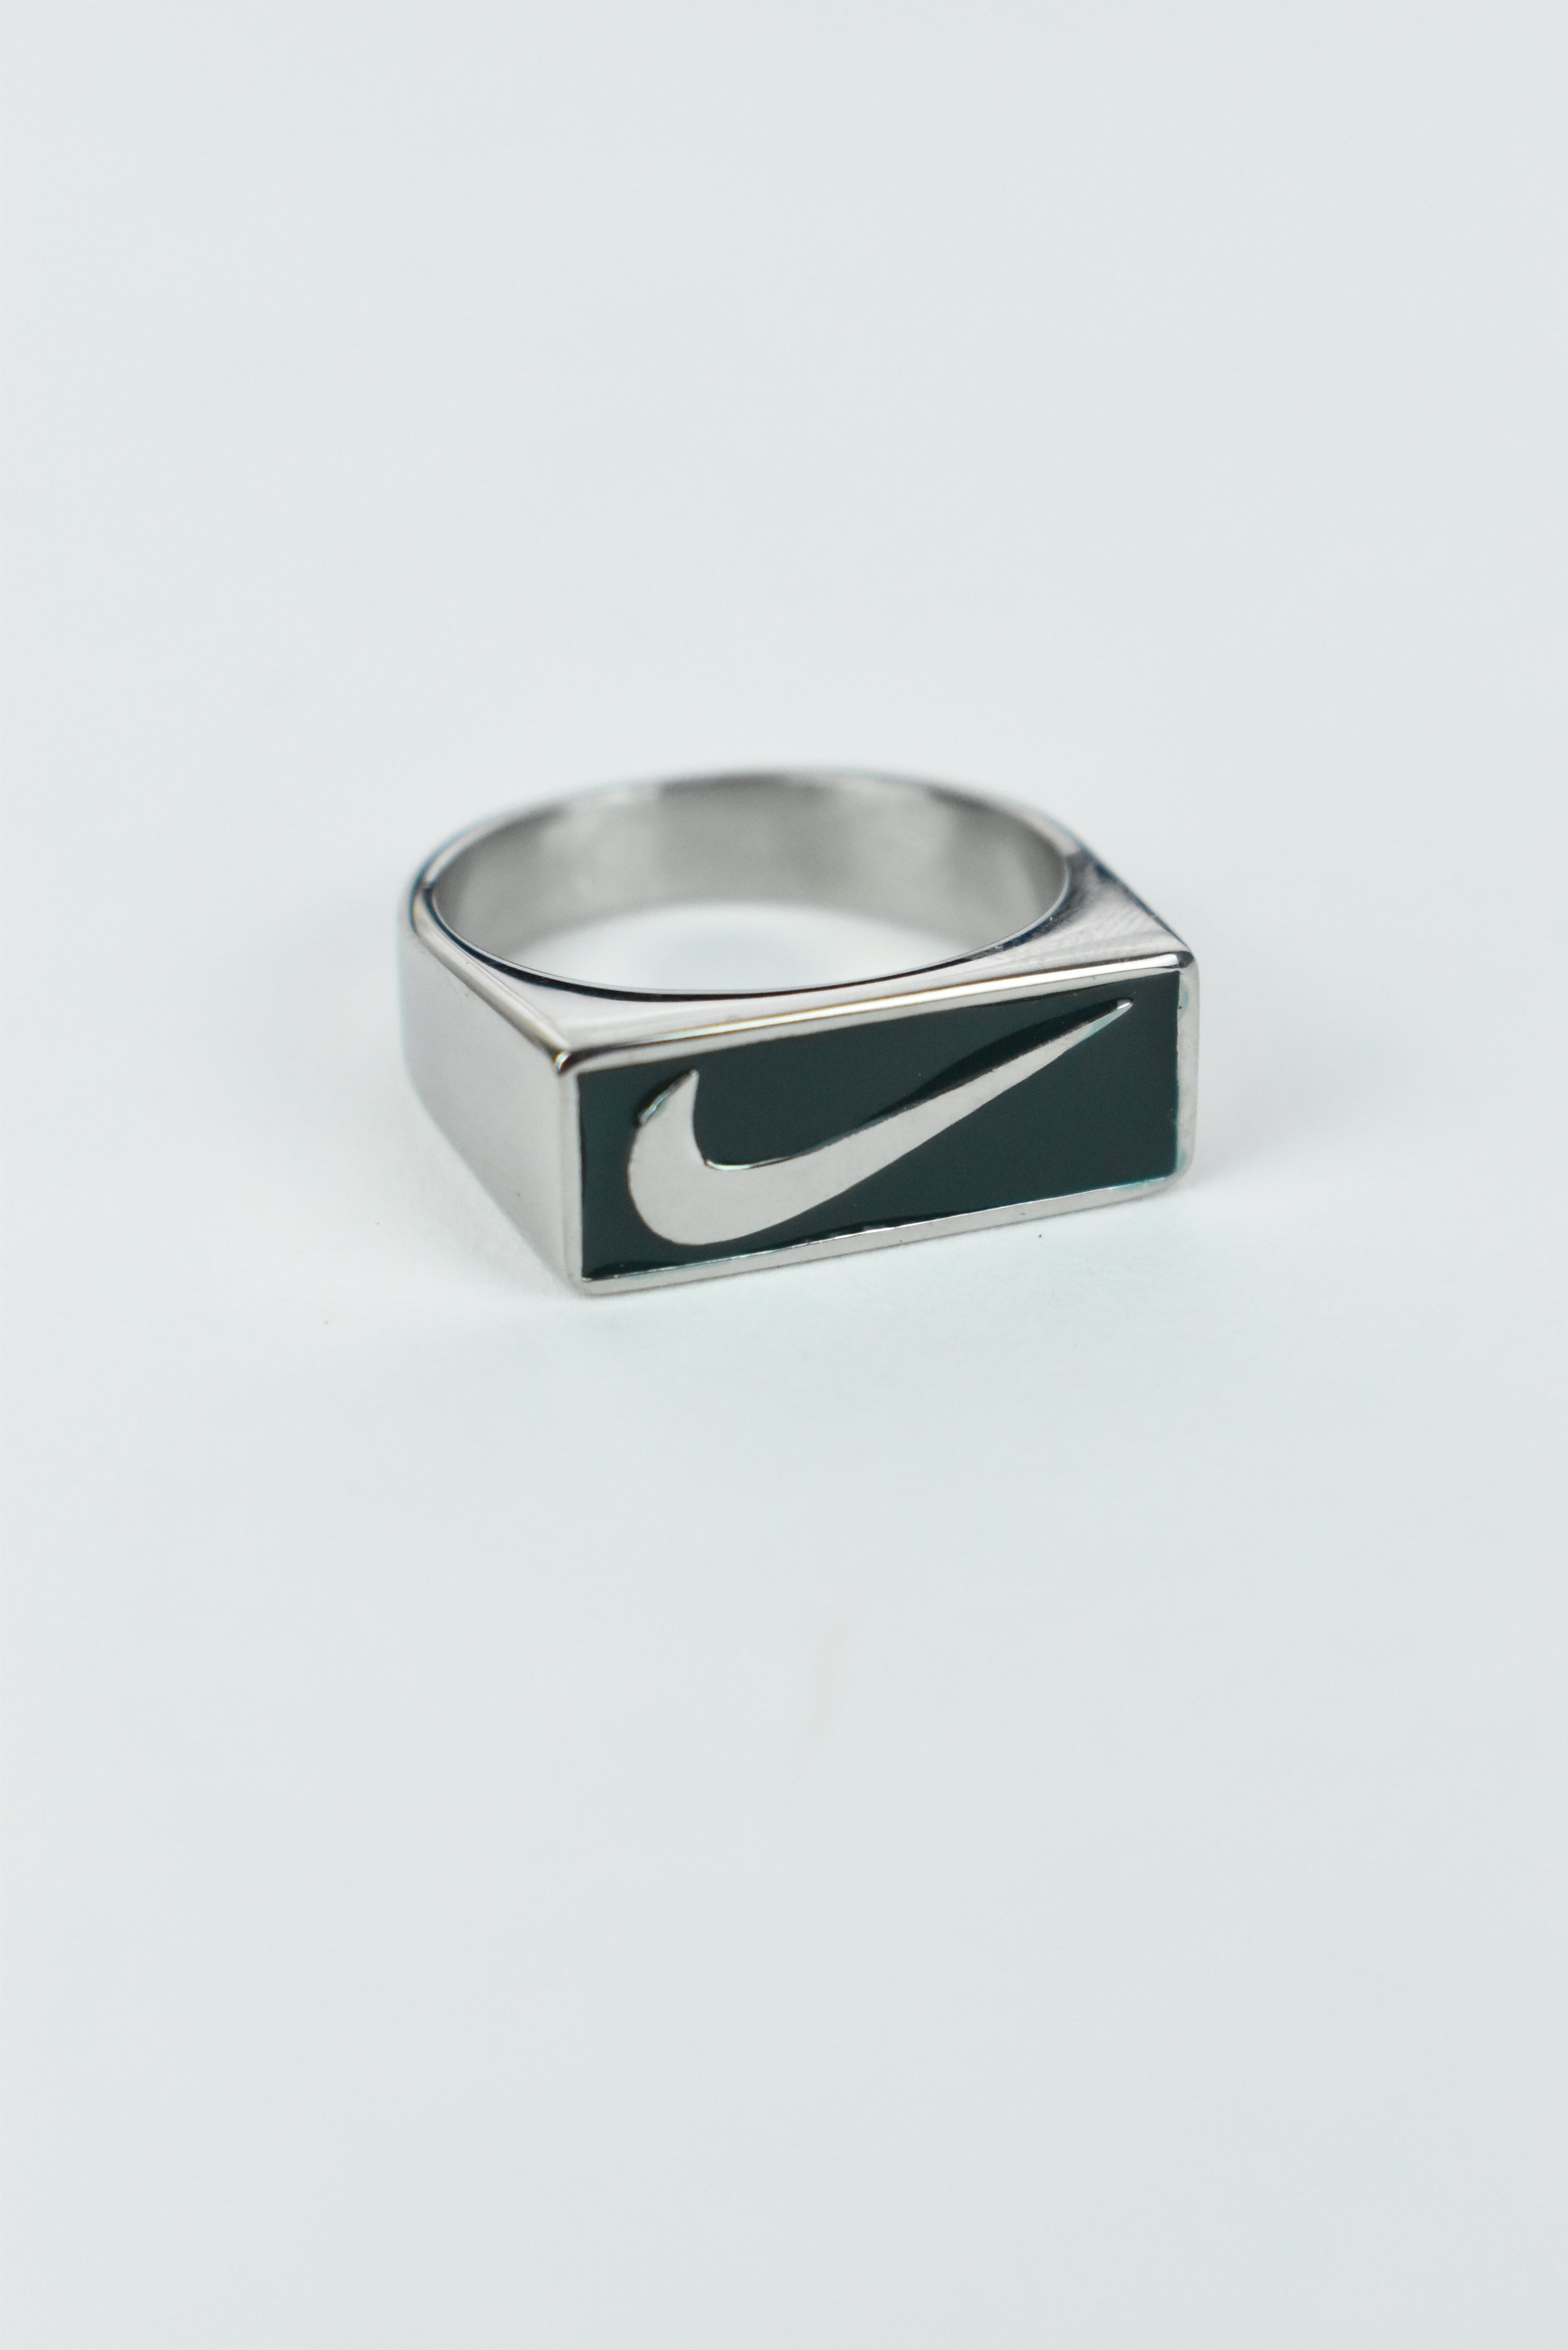 Nike Swoosh Ring Bootleg Silver/Gold